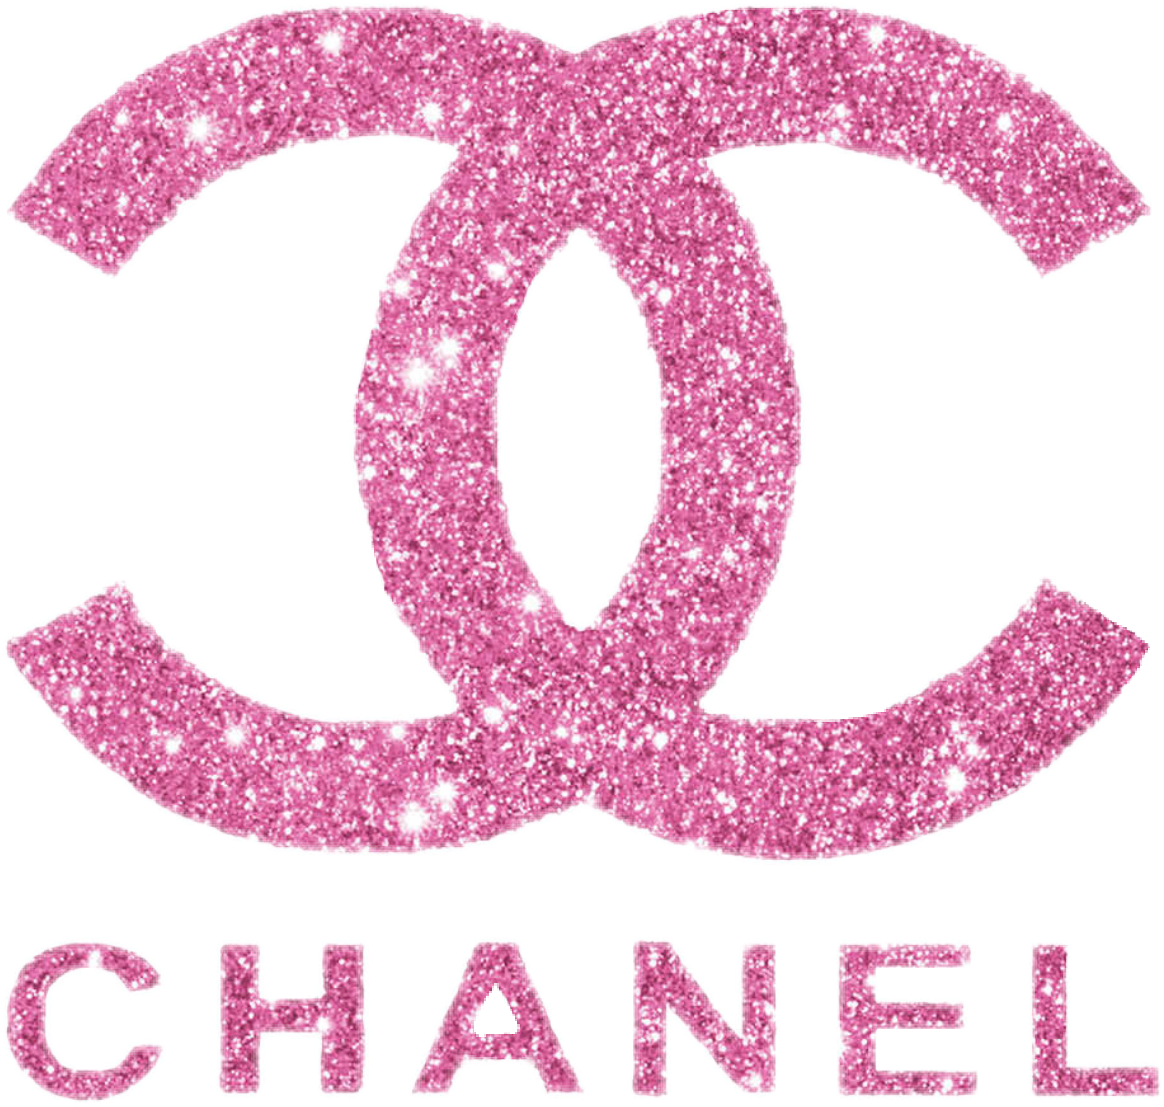 Chanel Logo png download - 600*600 - Free Transparent Chanel png Download.  - CleanPNG / KissPNG